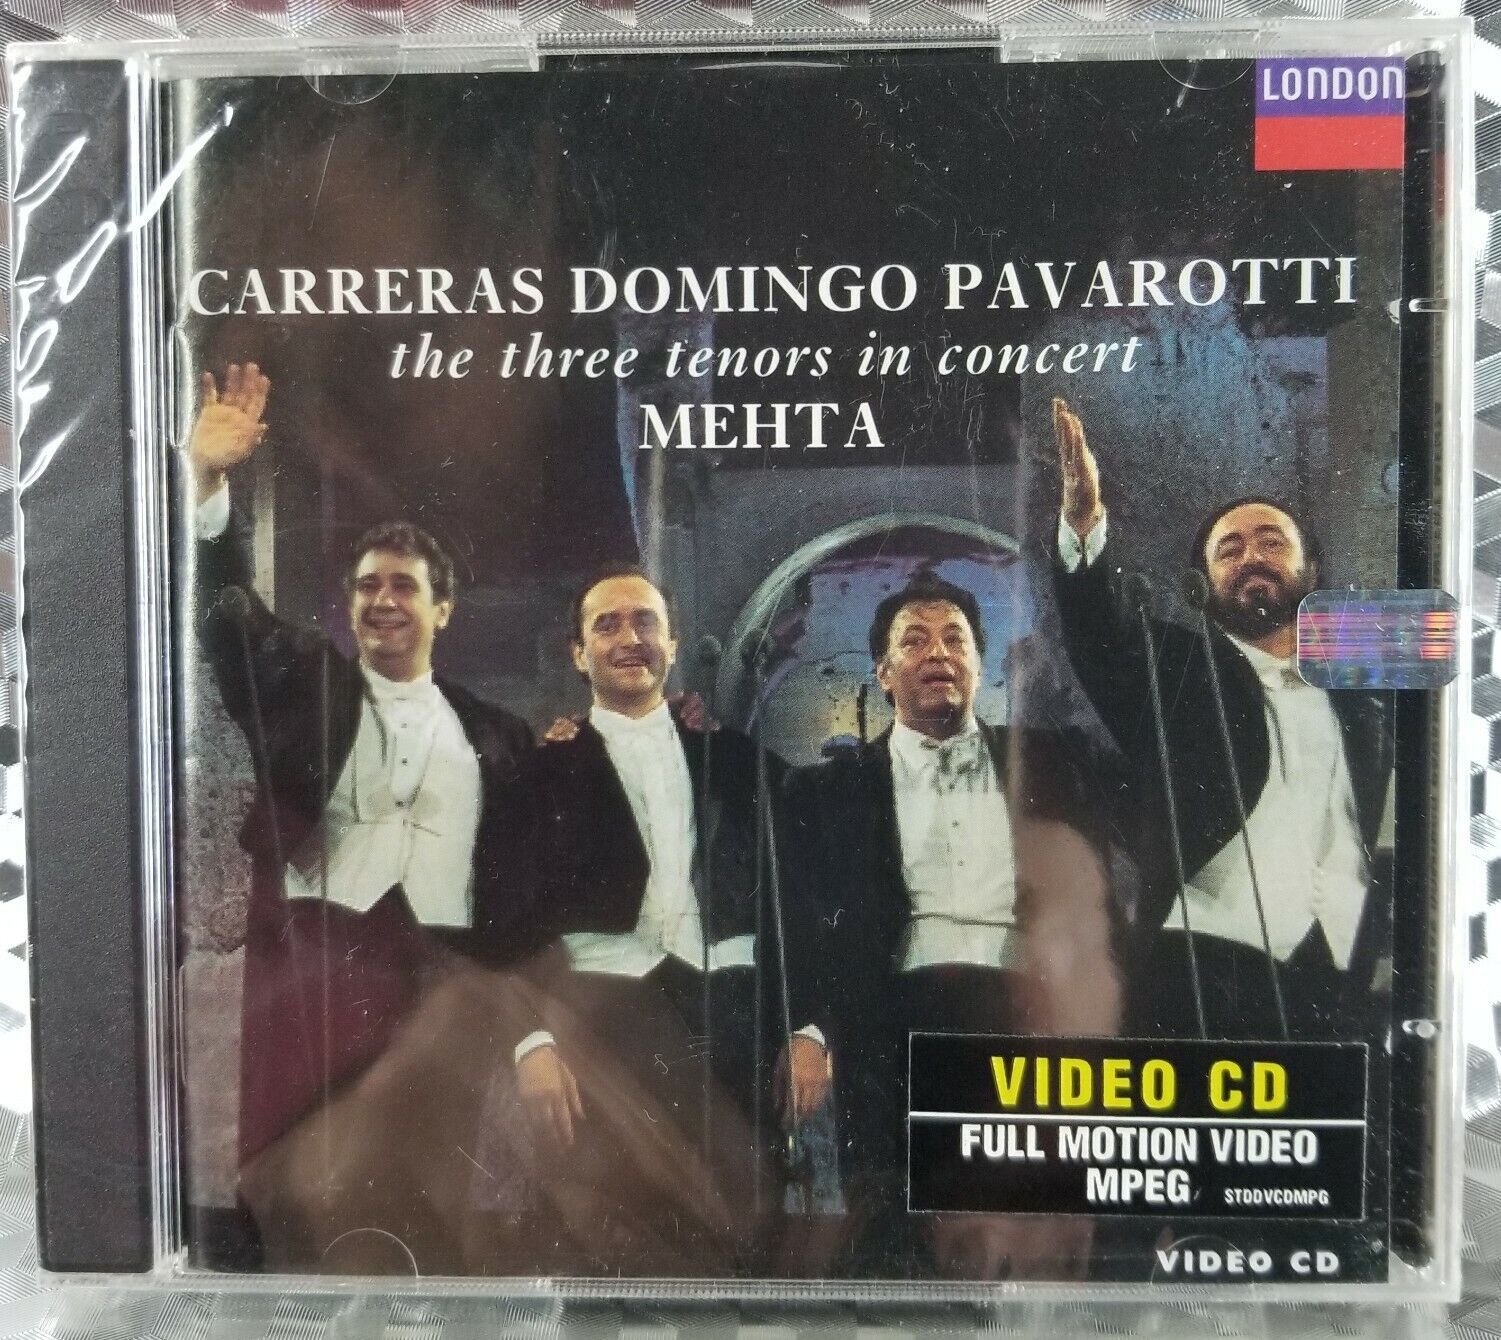 Carreras Domingo Pavarotti CD-i Video CD Mehta Three Tenors in Concert Vintage